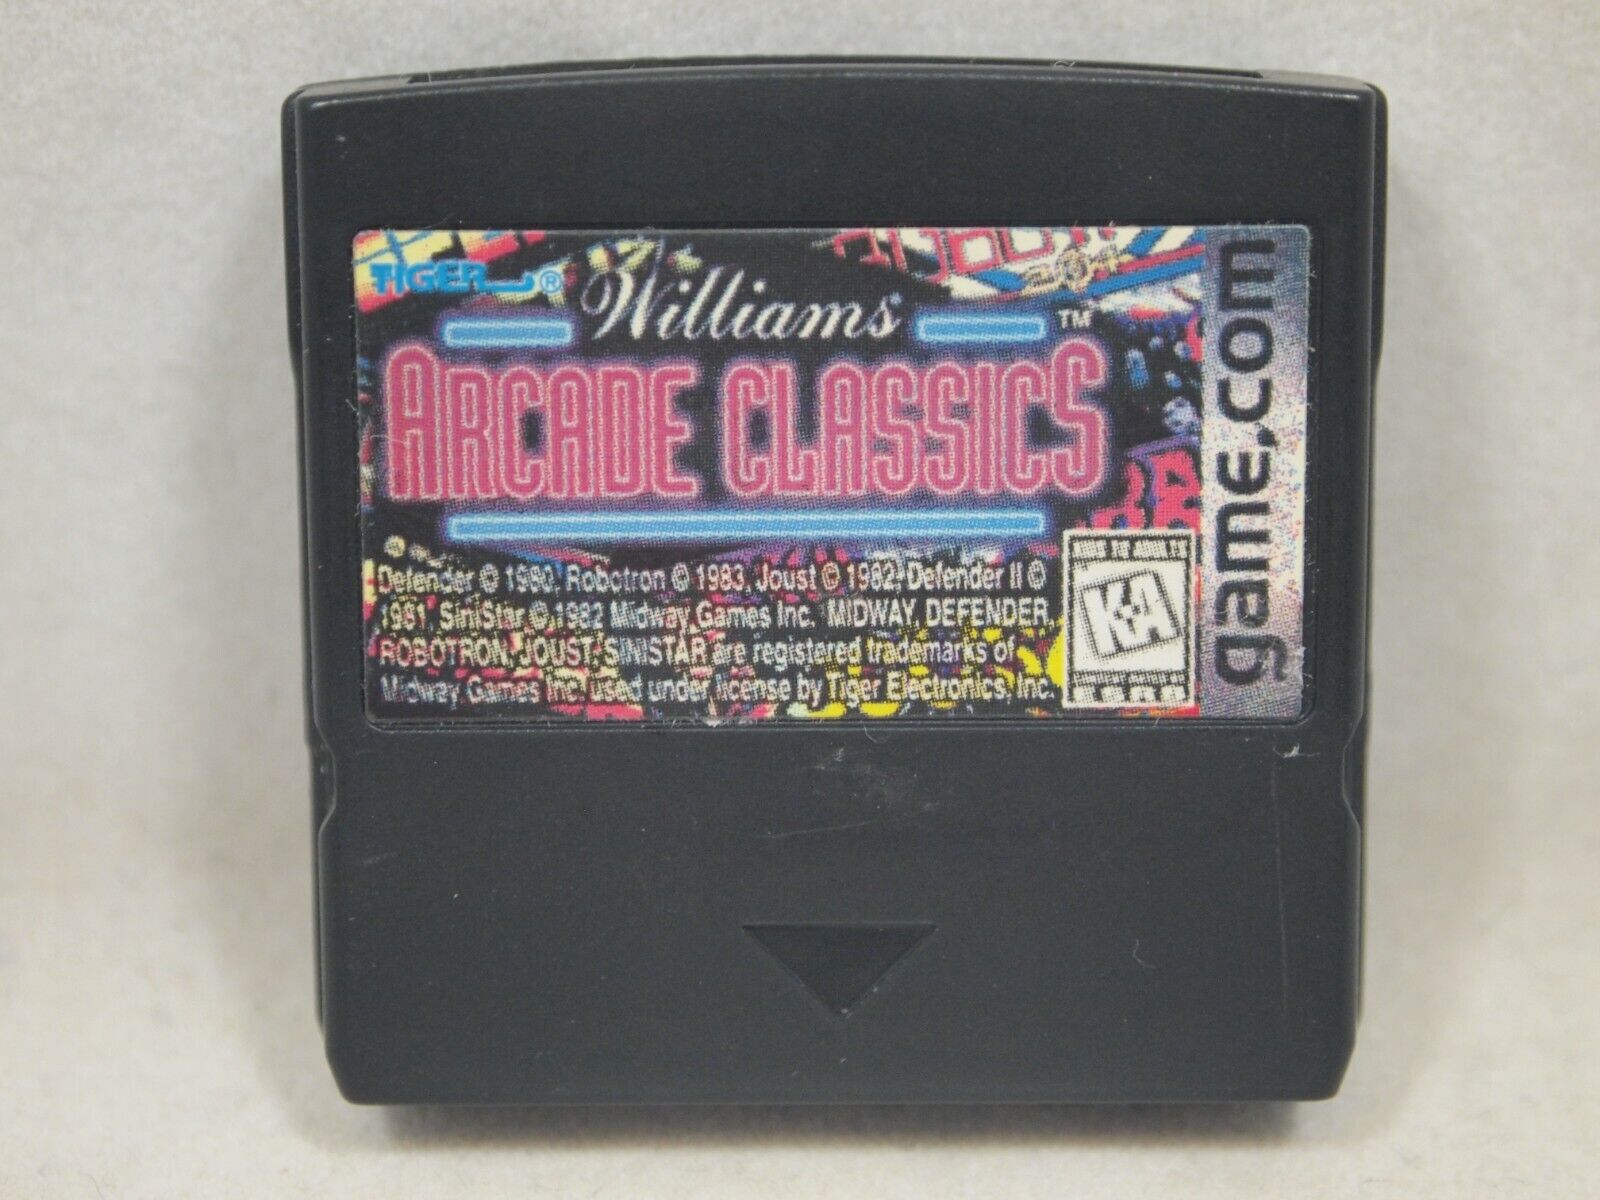 Williams Arcade Classics Cartridge for Tiger Game.com Handheld System